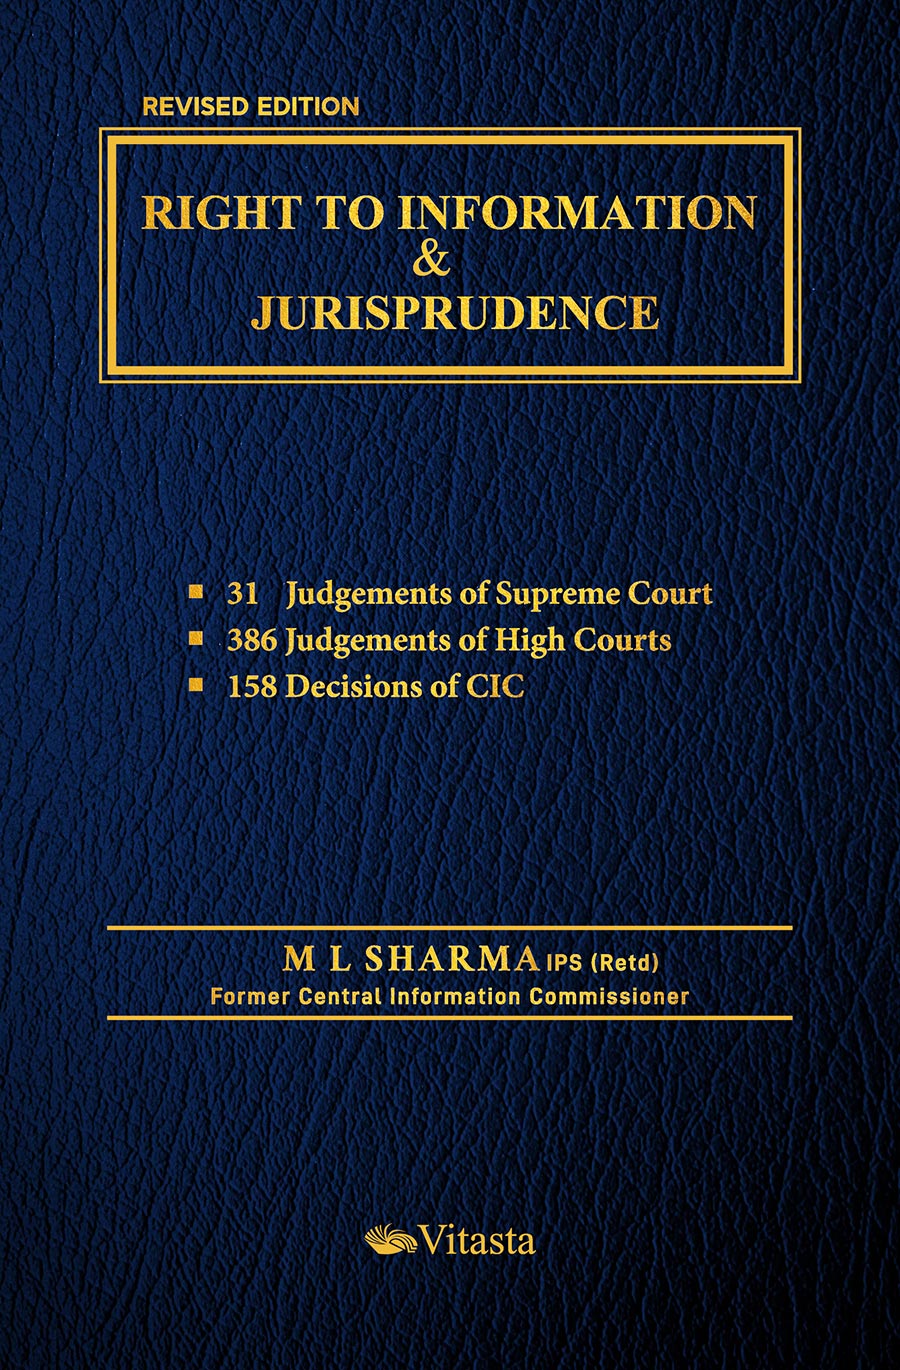 Right to Information & Jurisprudence